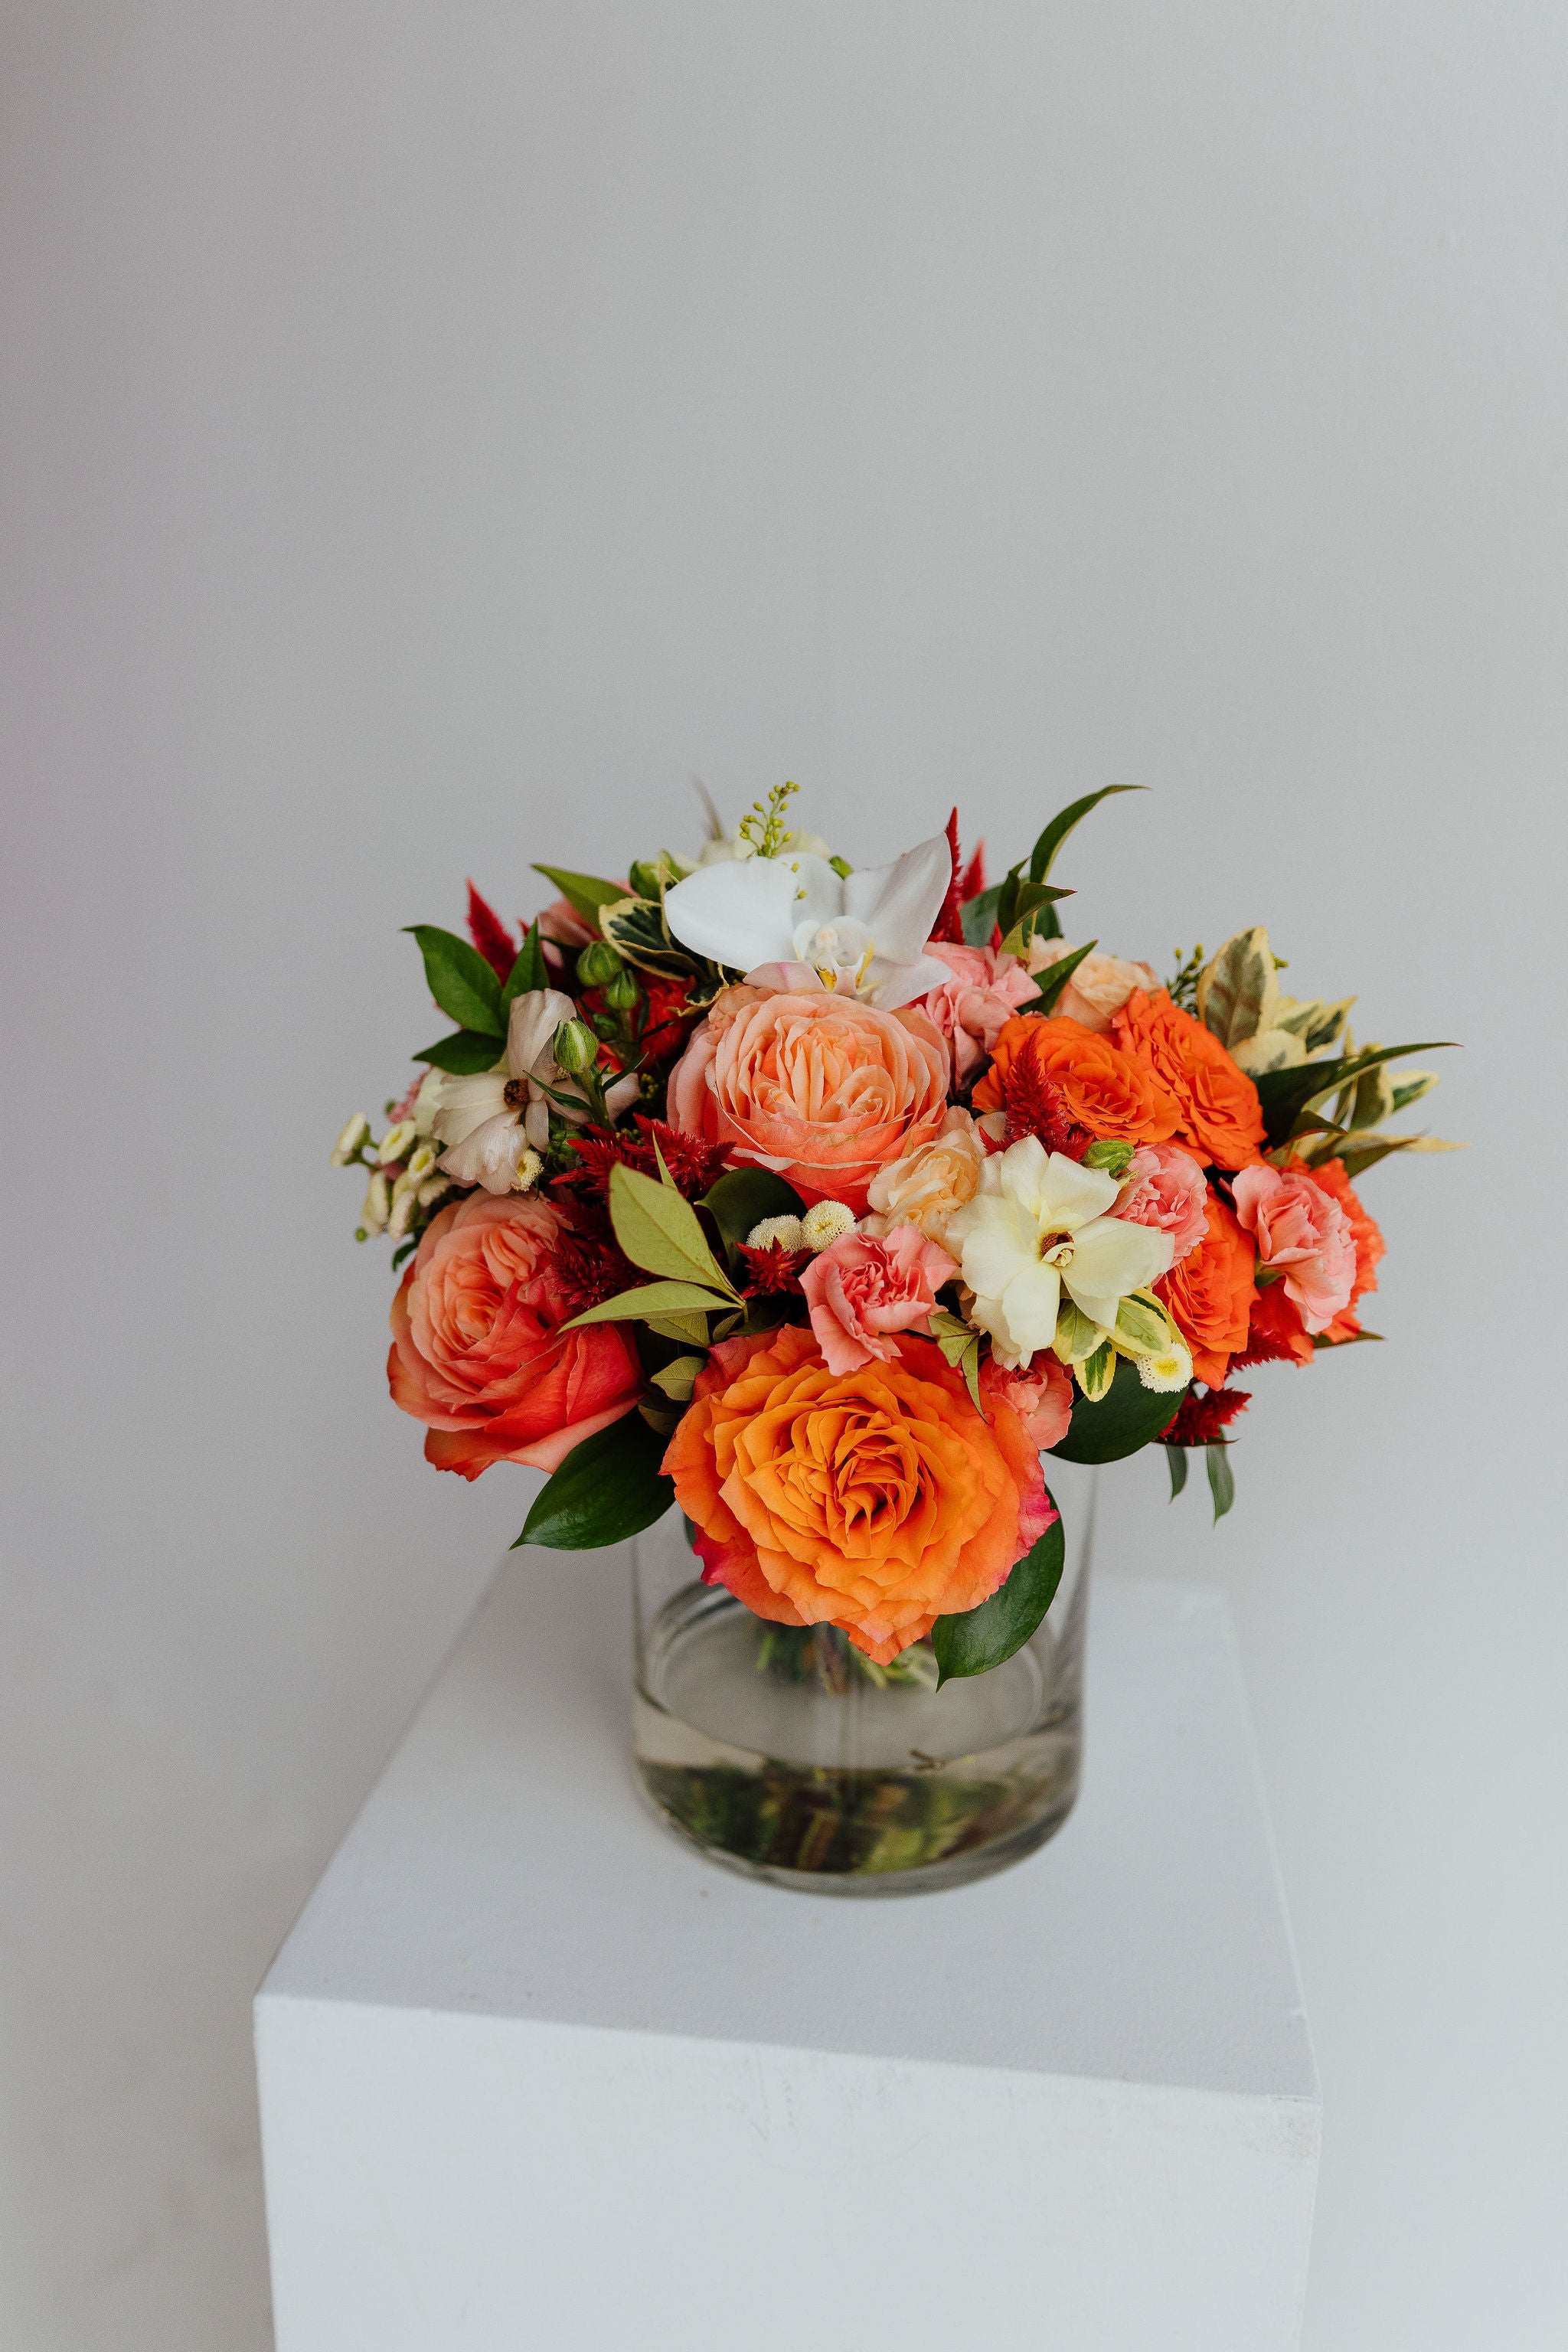 Fall-themed flower arrangement in a glass vase